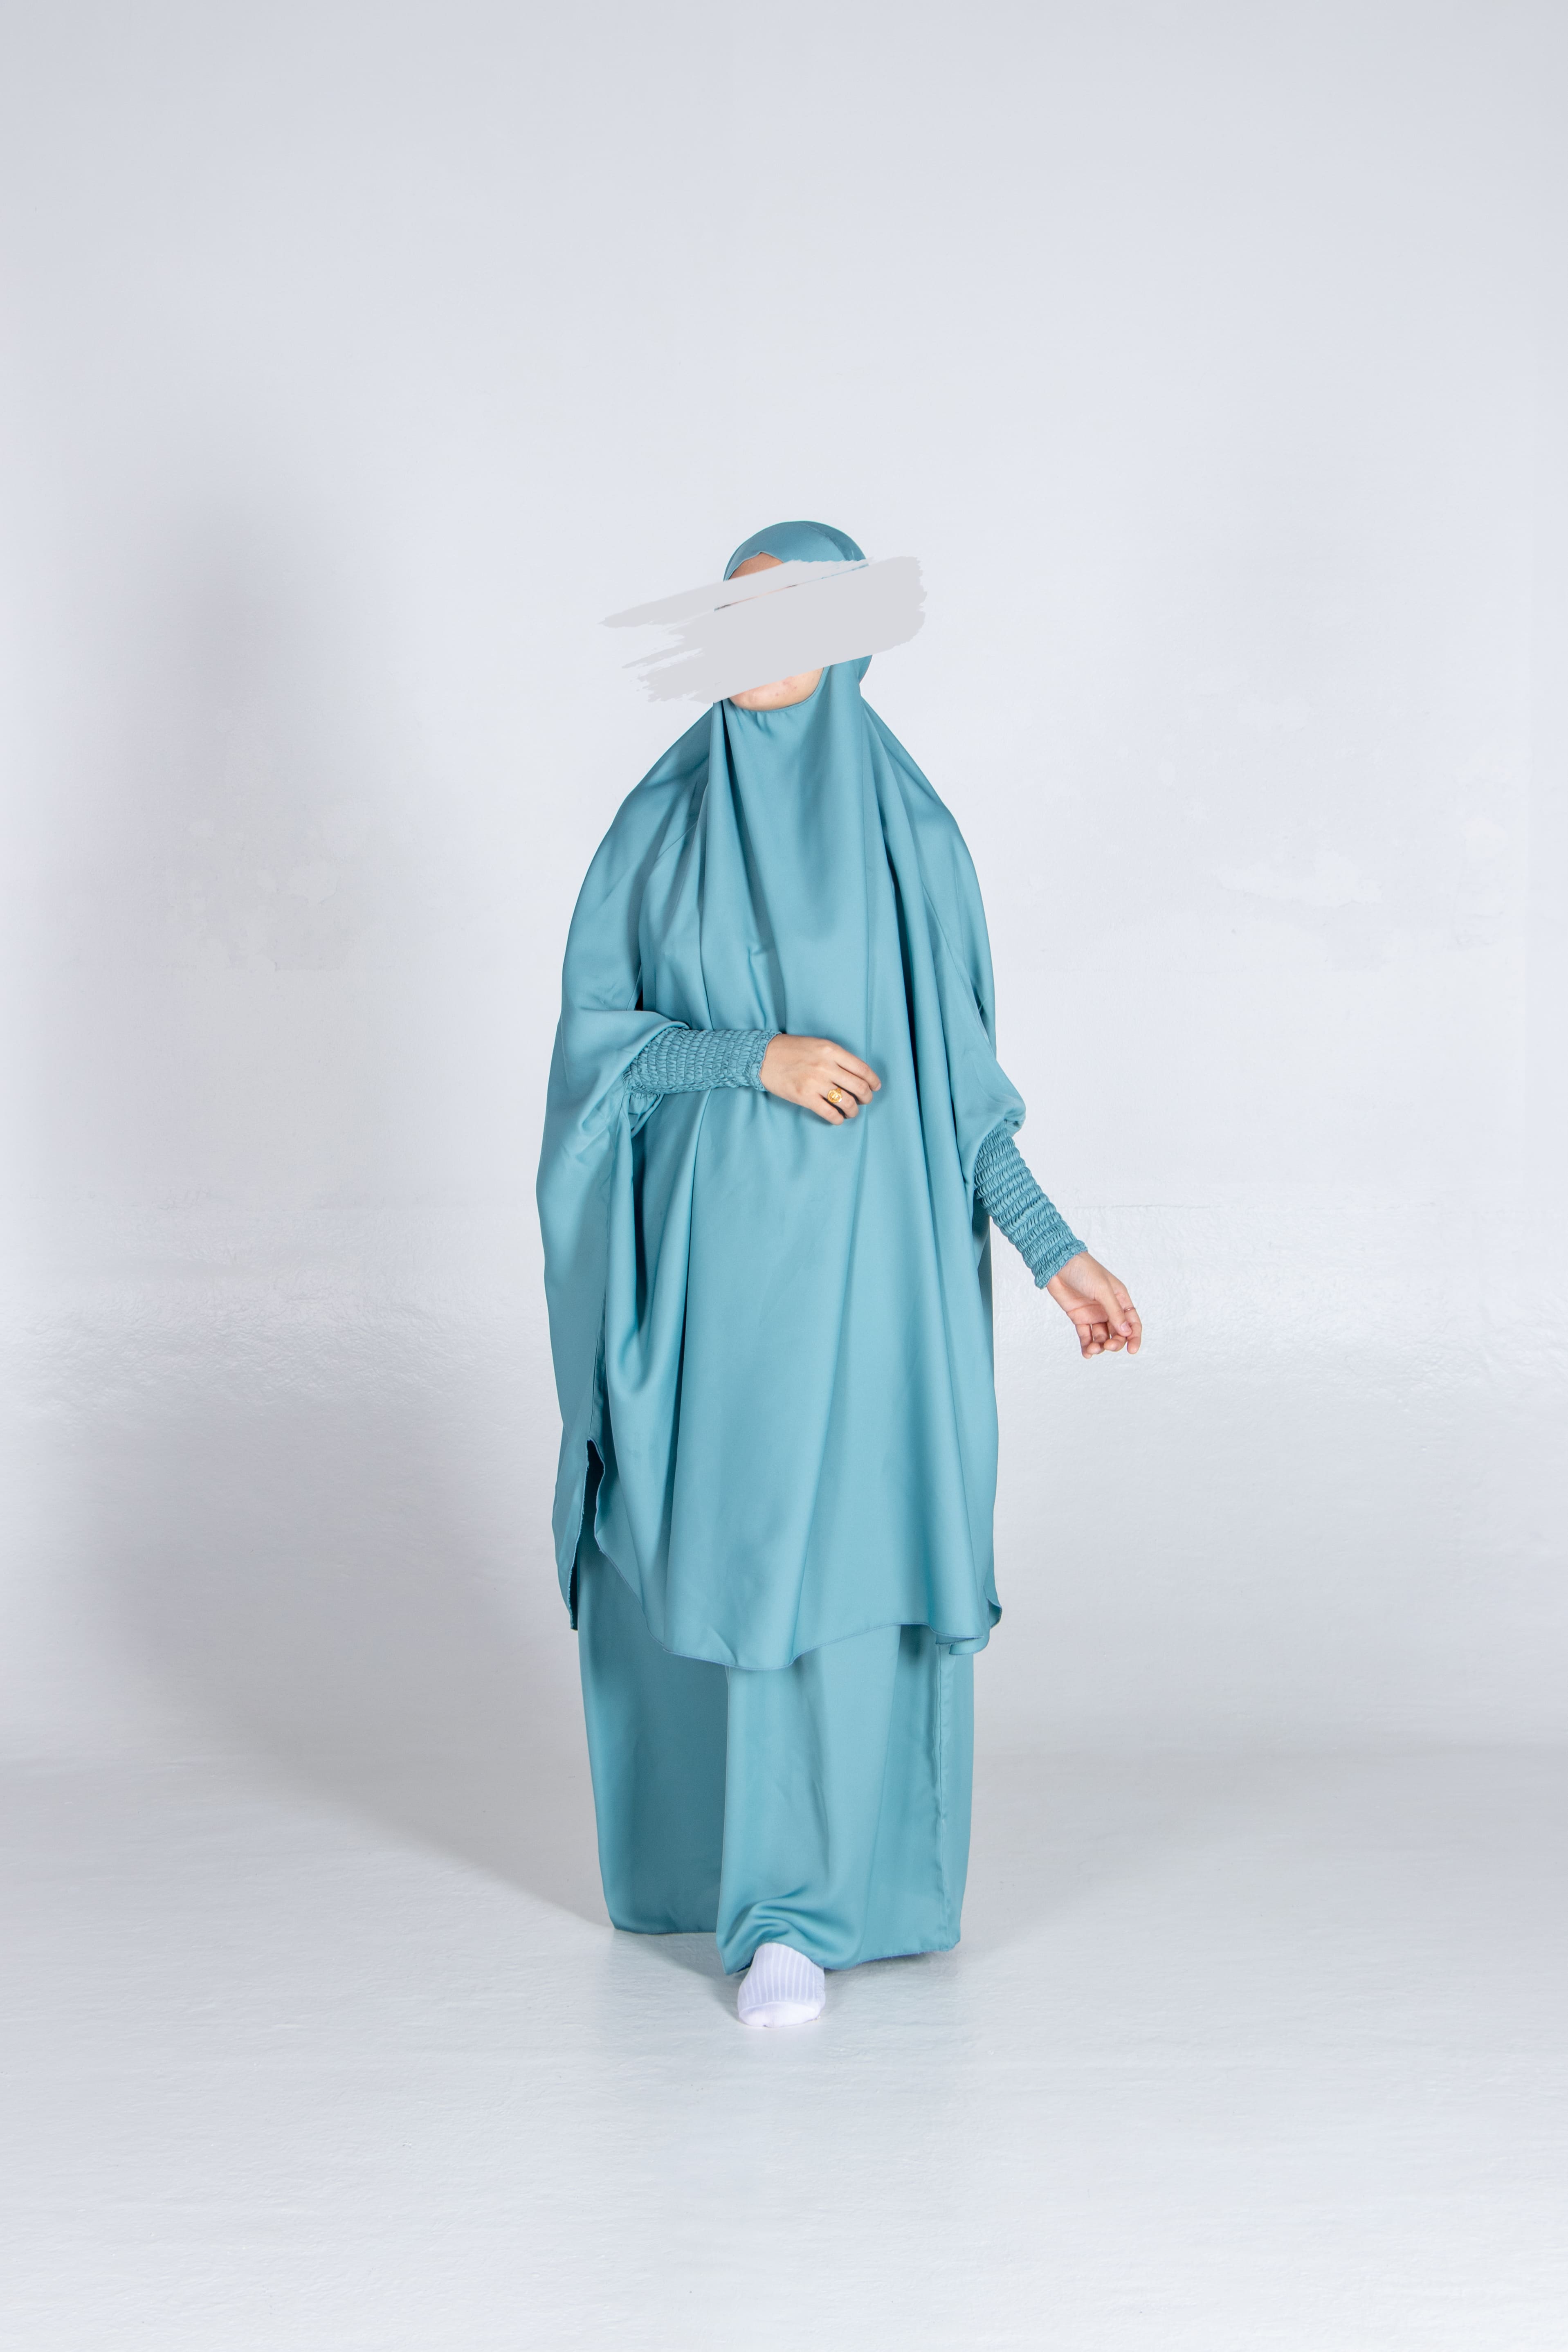 Teal Blue Jilbab - Jilbab - Muslim Lifestyle Store